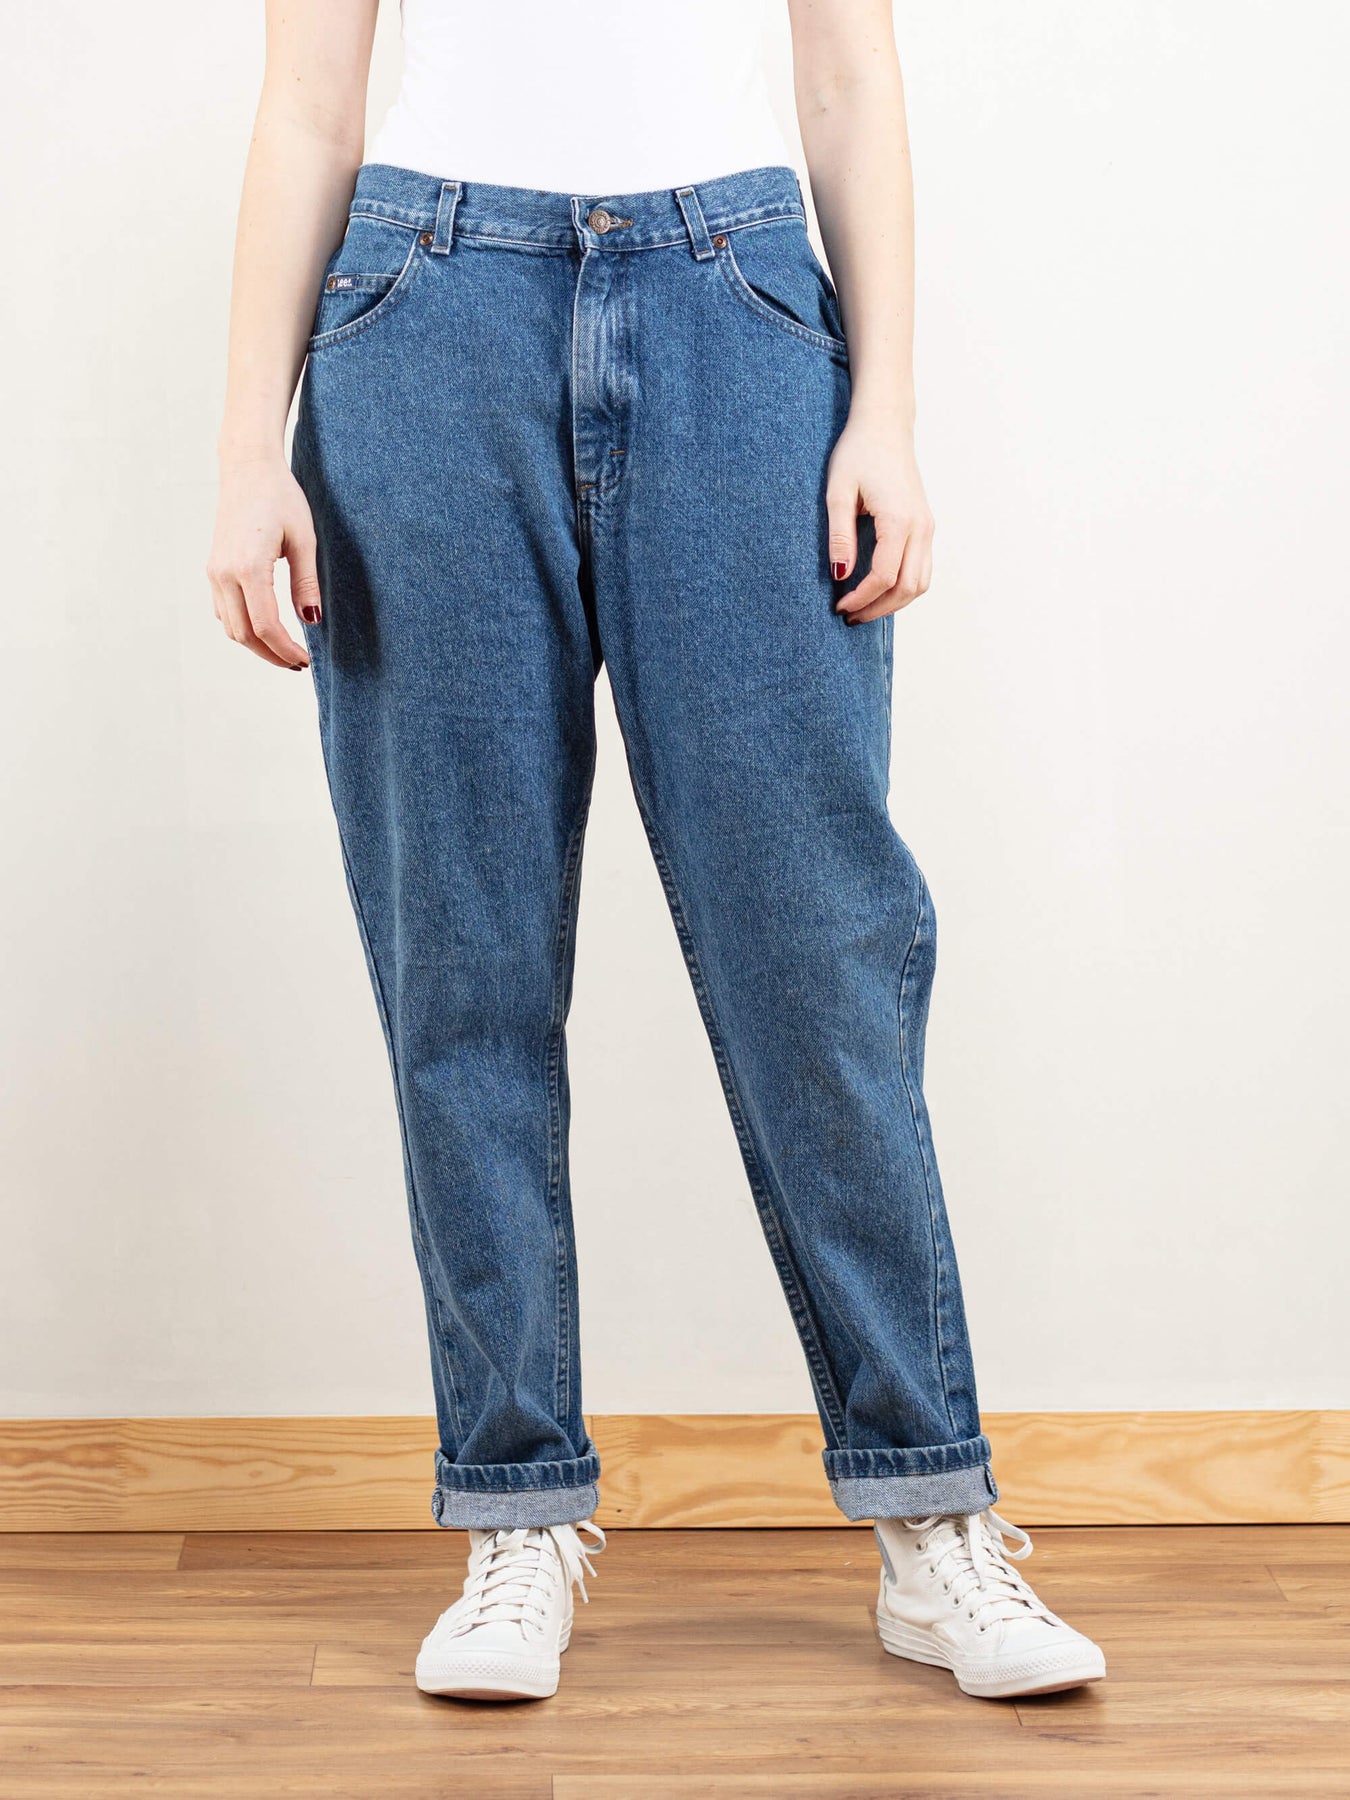 Online Vintage Store, 80's Women LEE Jeans